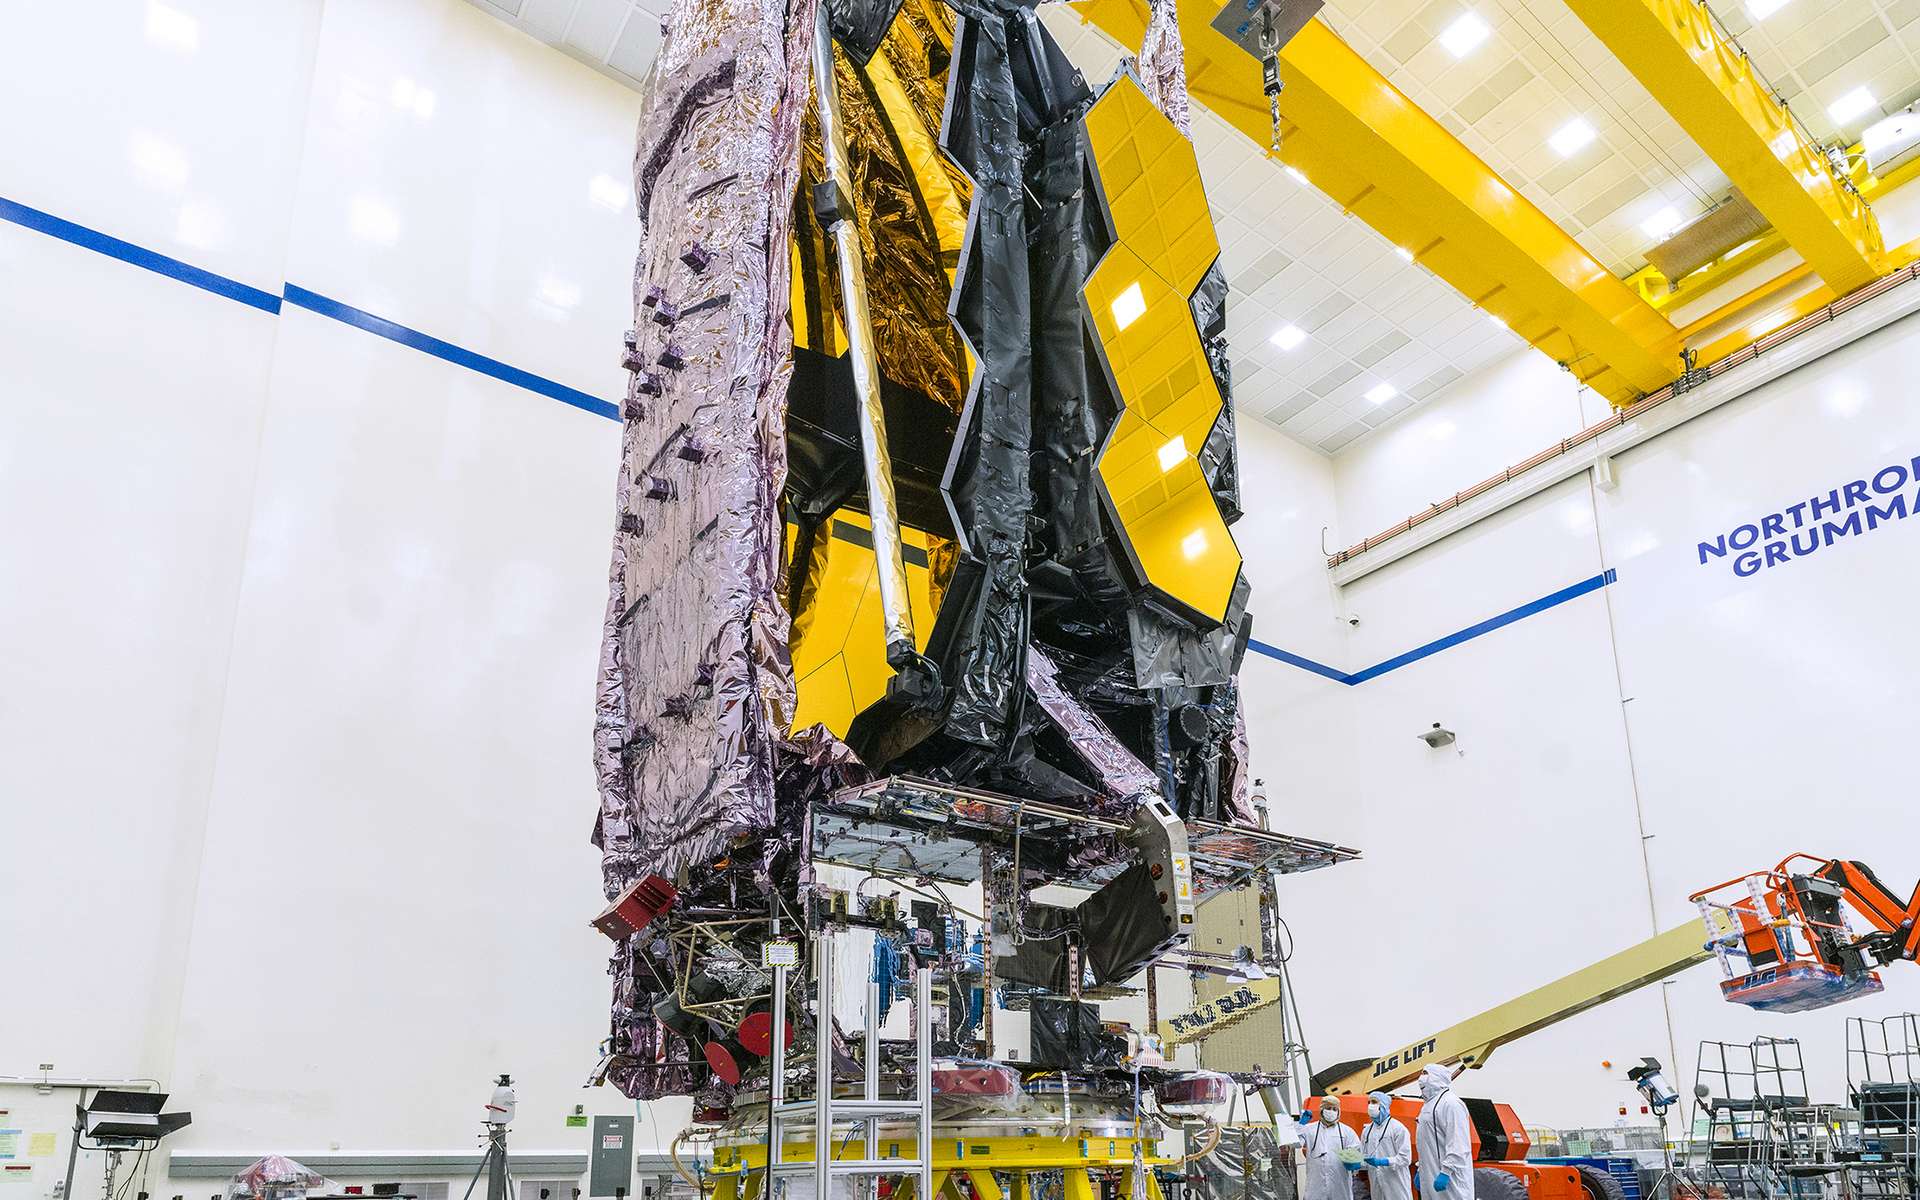 James Webb Space Telescope folded, ready for launch aboard Ariane 5